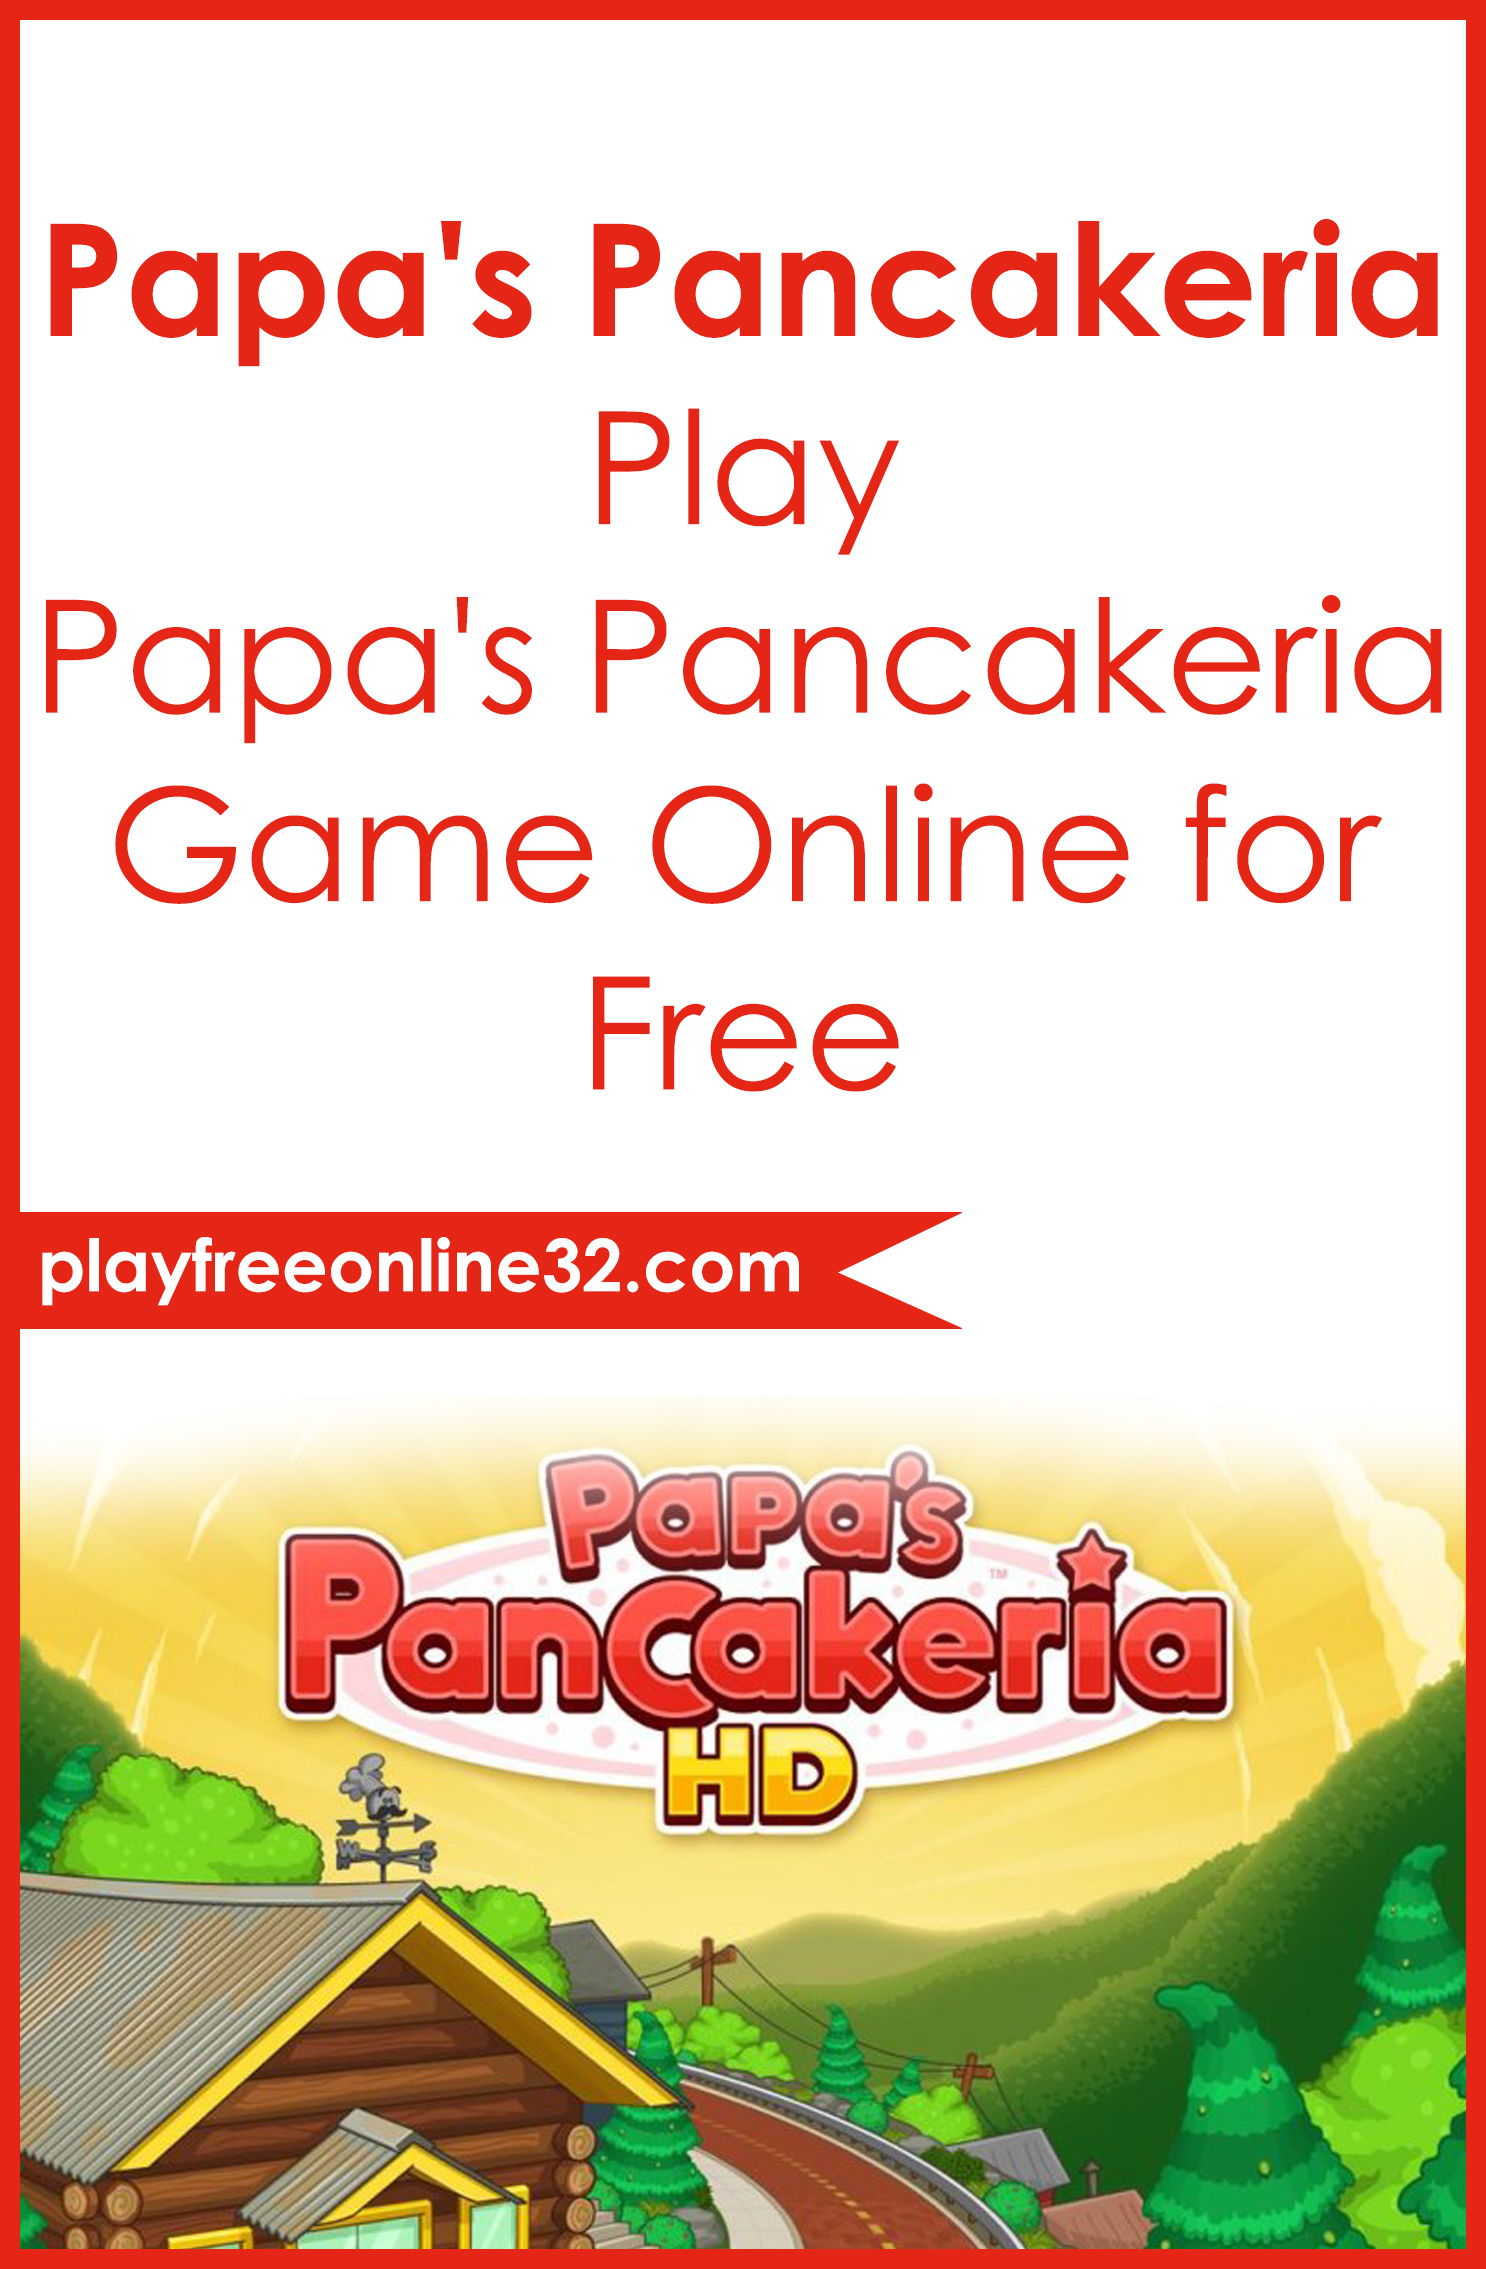 Papa's Pancakeria • Play Papa's Pancakeria Game Online for Free Pinterest